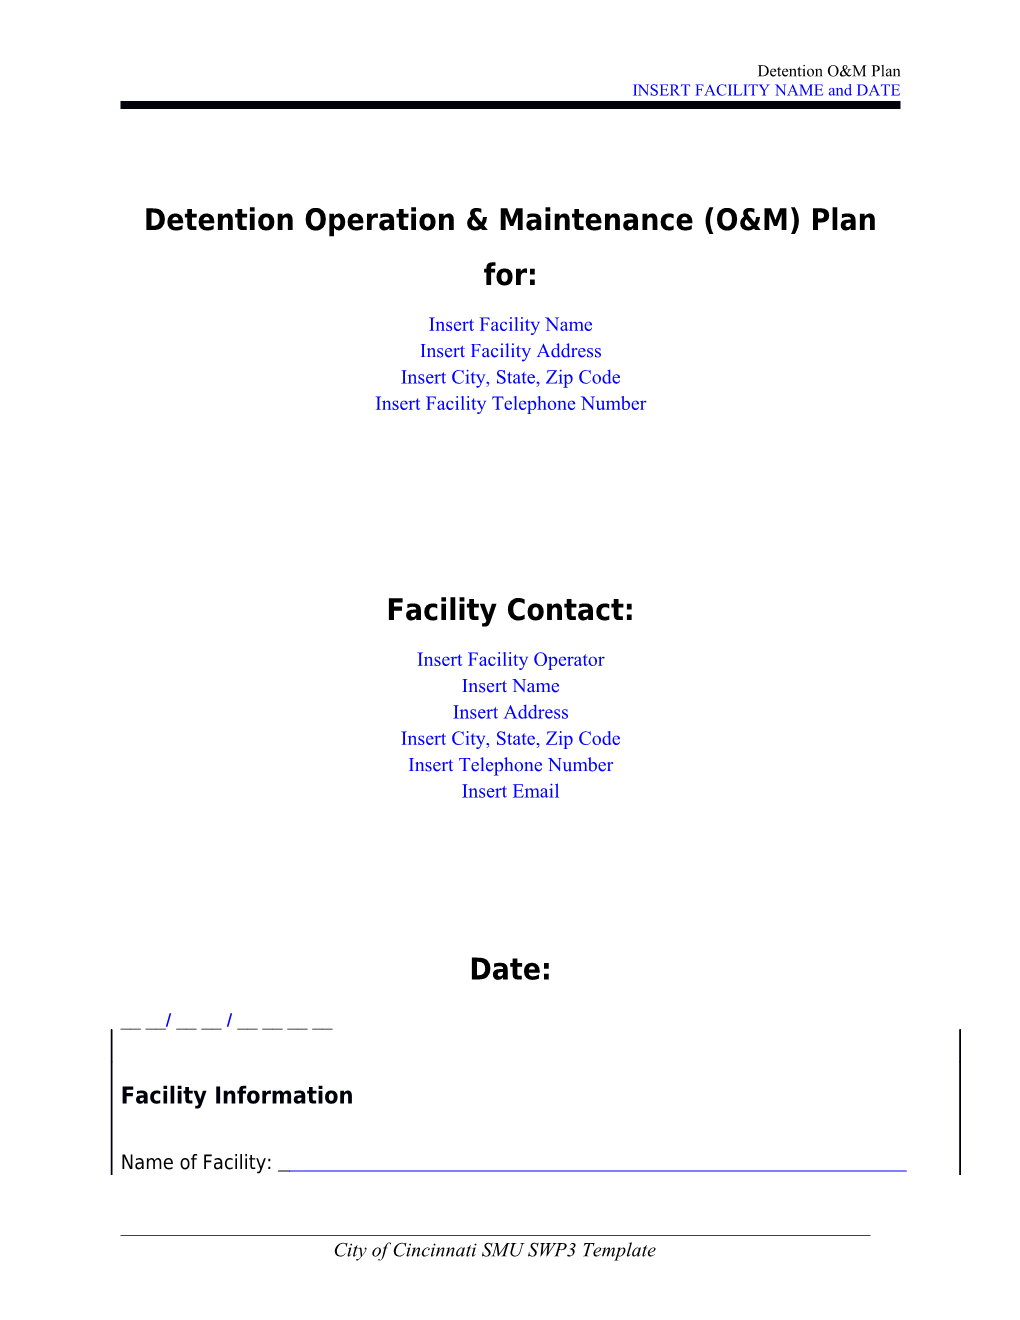 Detention Operation & Maintenance (O&M) Plan